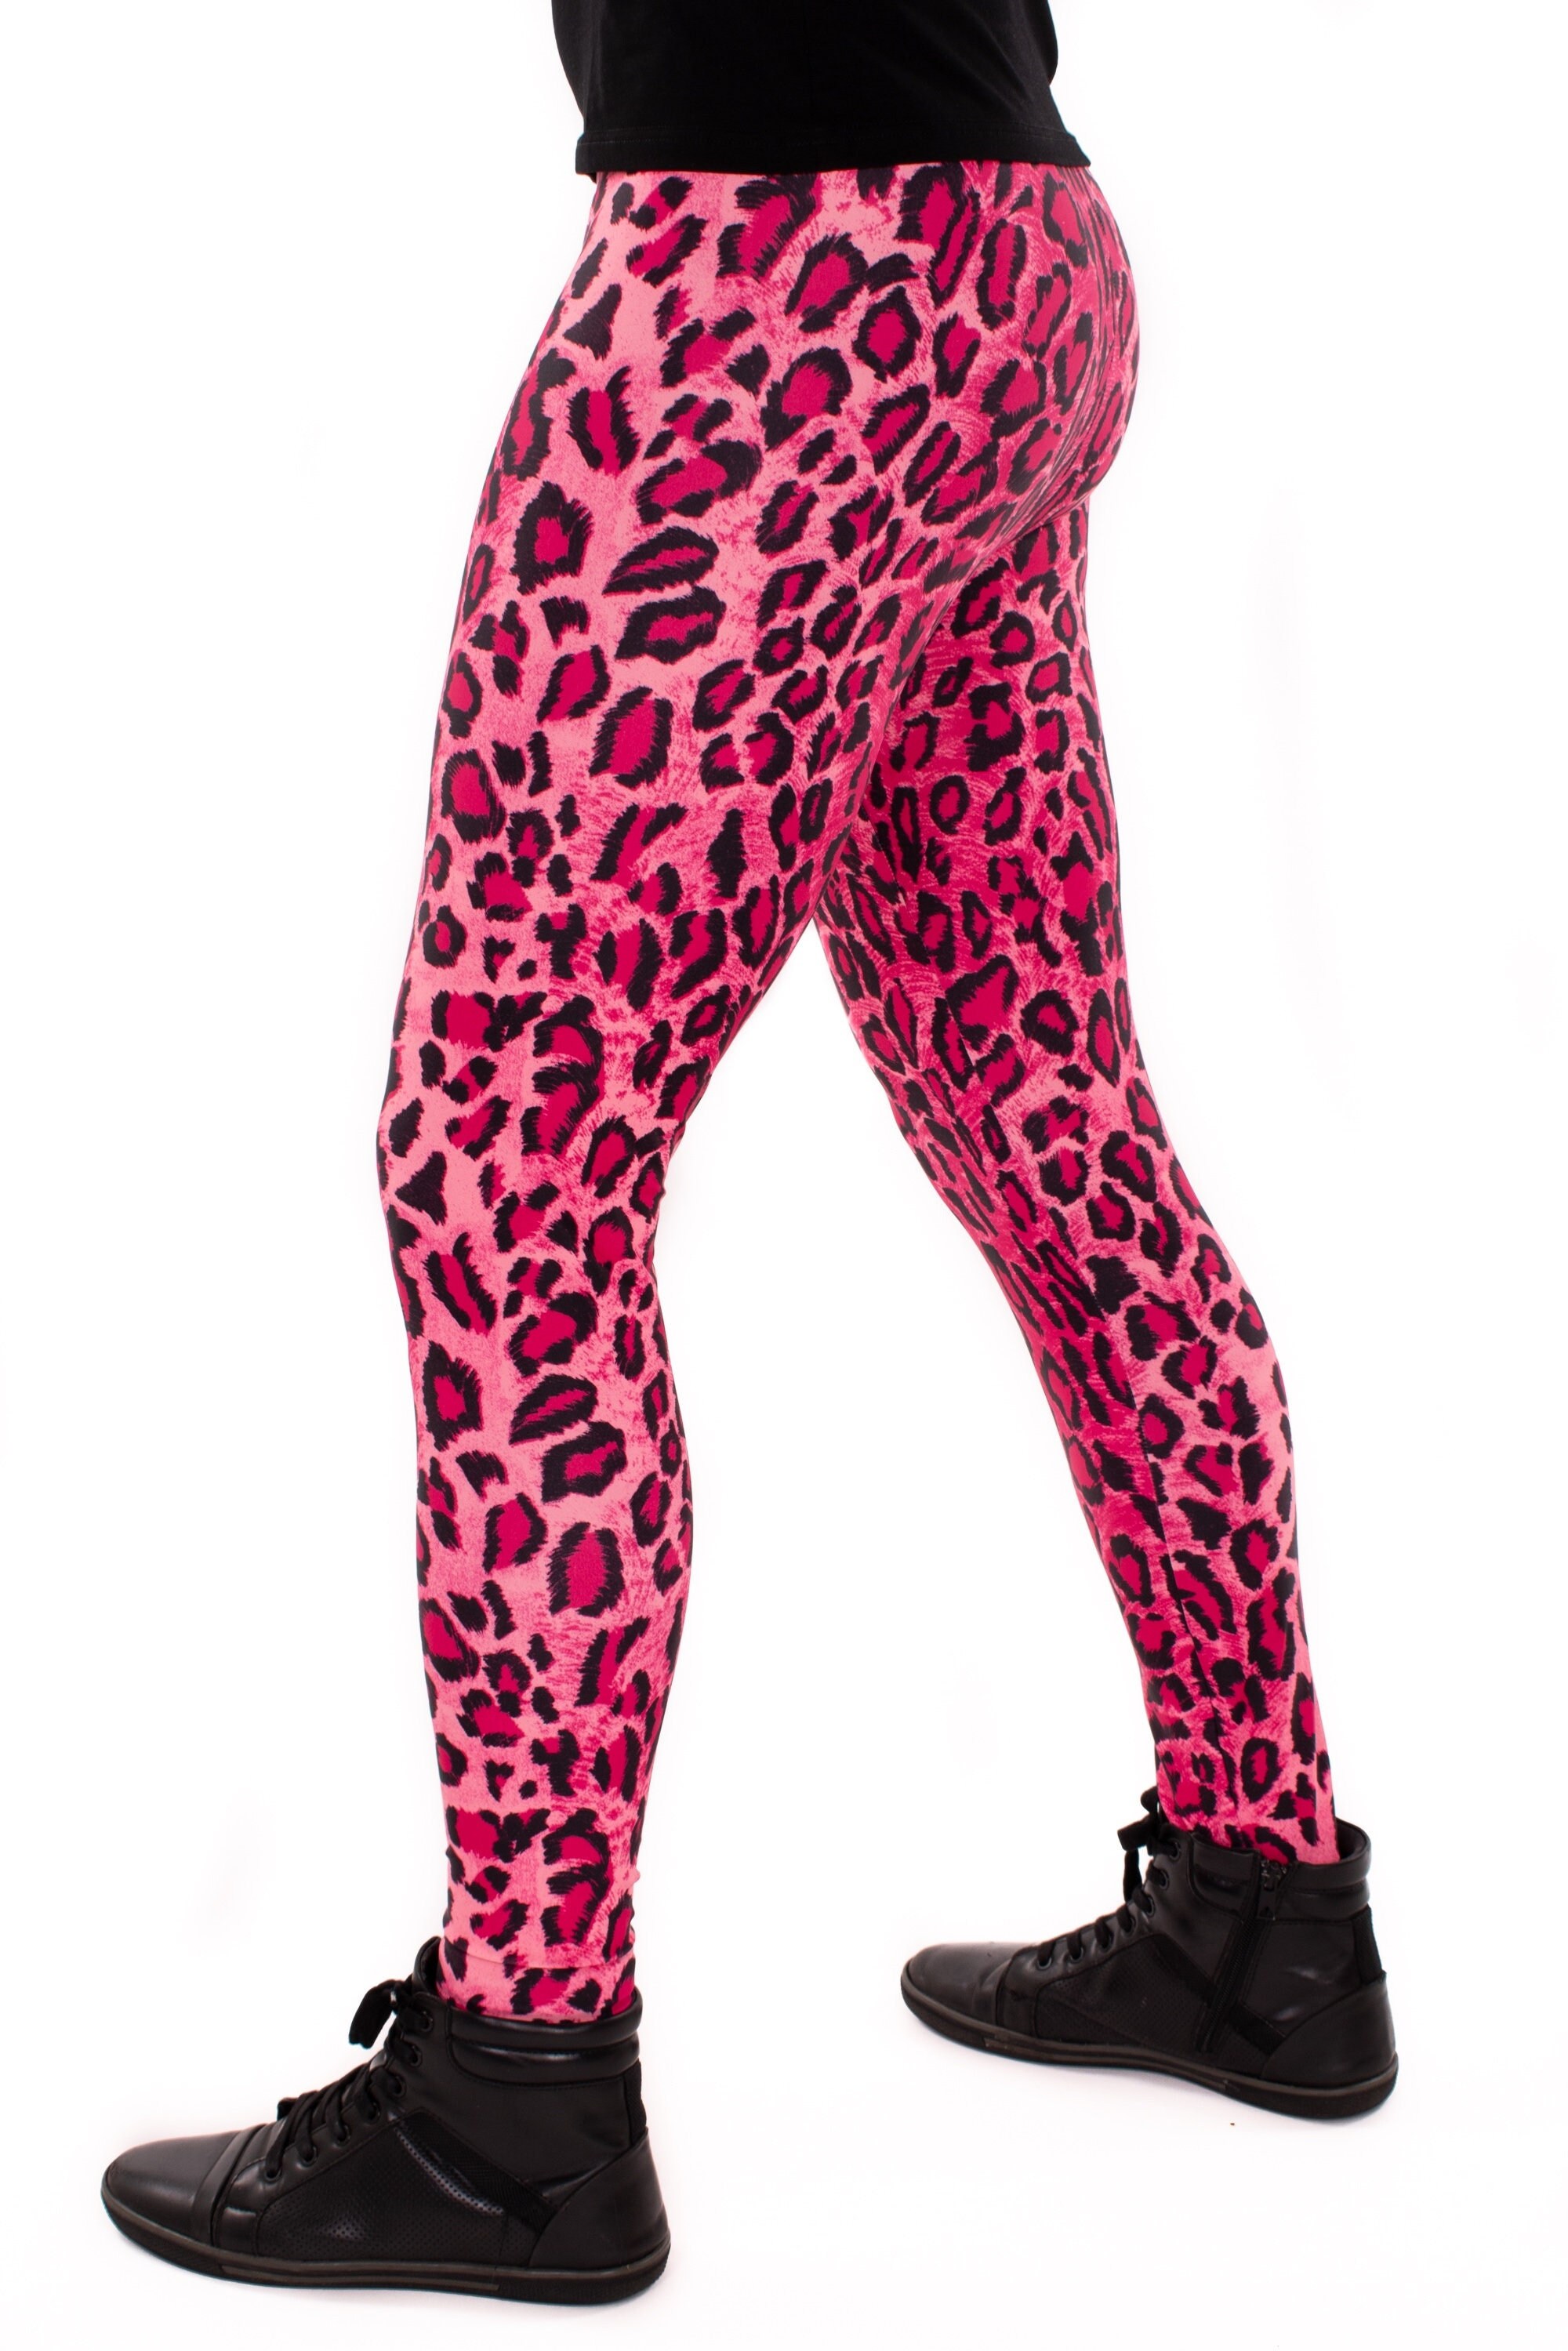 uitstulping Heb geleerd Strippen Neon Roze Dames Legging Cadeaus Gadgets Kopen Ballonnen Feestkleding |  Legging Opaque Neonroze (m Stretch) | tk.gov.ba